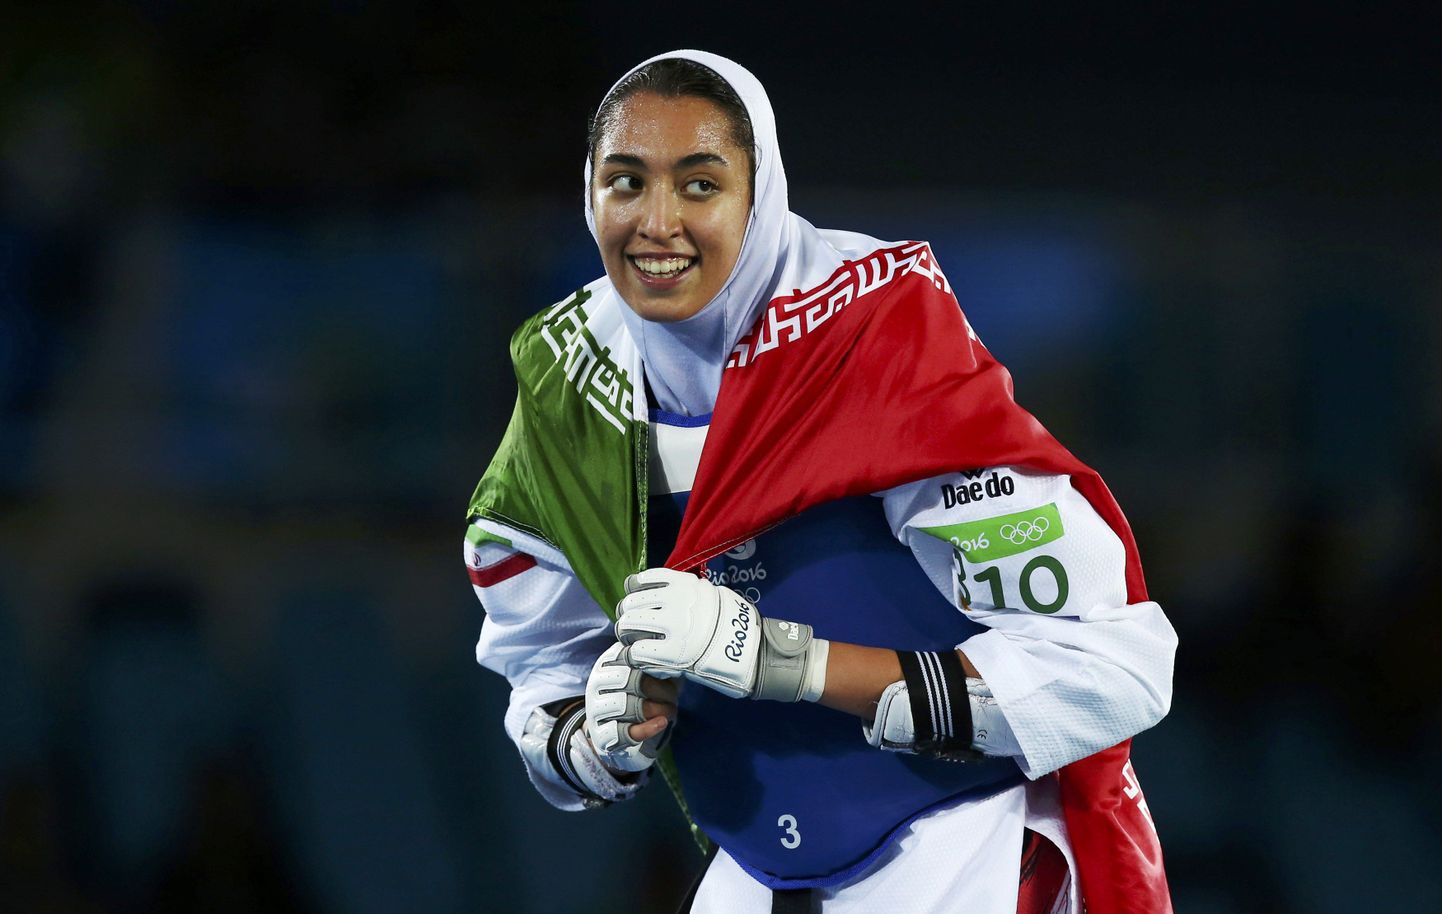 Kimia Alizadeh Zenoorin võitis esimese Iraani naissportlasena olümpiamedali.